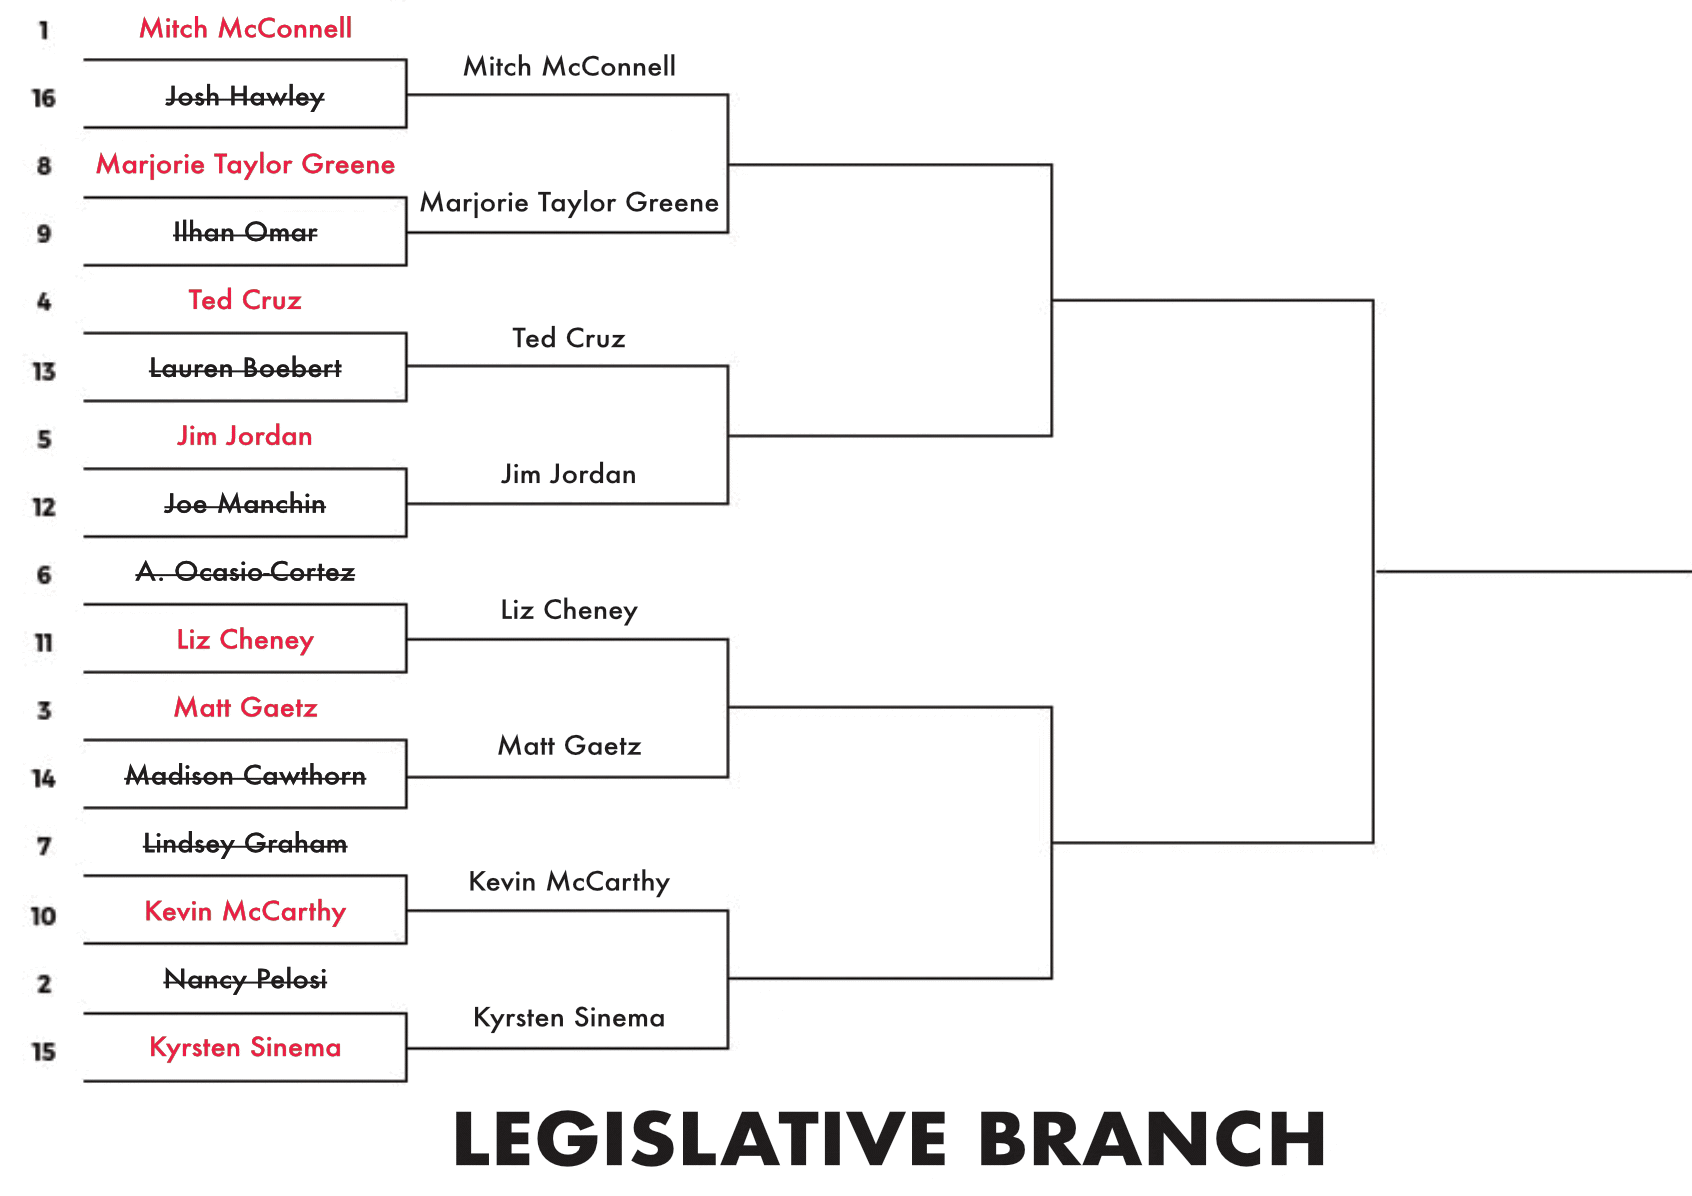 
#1 Senate Minority Leader Mitch McConnell (R-KY) vs. #8 Rep. Marjorie Taylor Greene (R-GA);
#4 Sen. Ted Cruz (R-TX) vs. #5 Rep. Jim Jordan (R-OH);
#11 Rep. Liz Cheney (R-WY) vs. #3 Rep. Matt Gaetz (R-FL);
#10 House Minority Leader Kevin McCarthy (R-CA) vs. #15 Sen. Kyrsten Sinema (D-AZ)